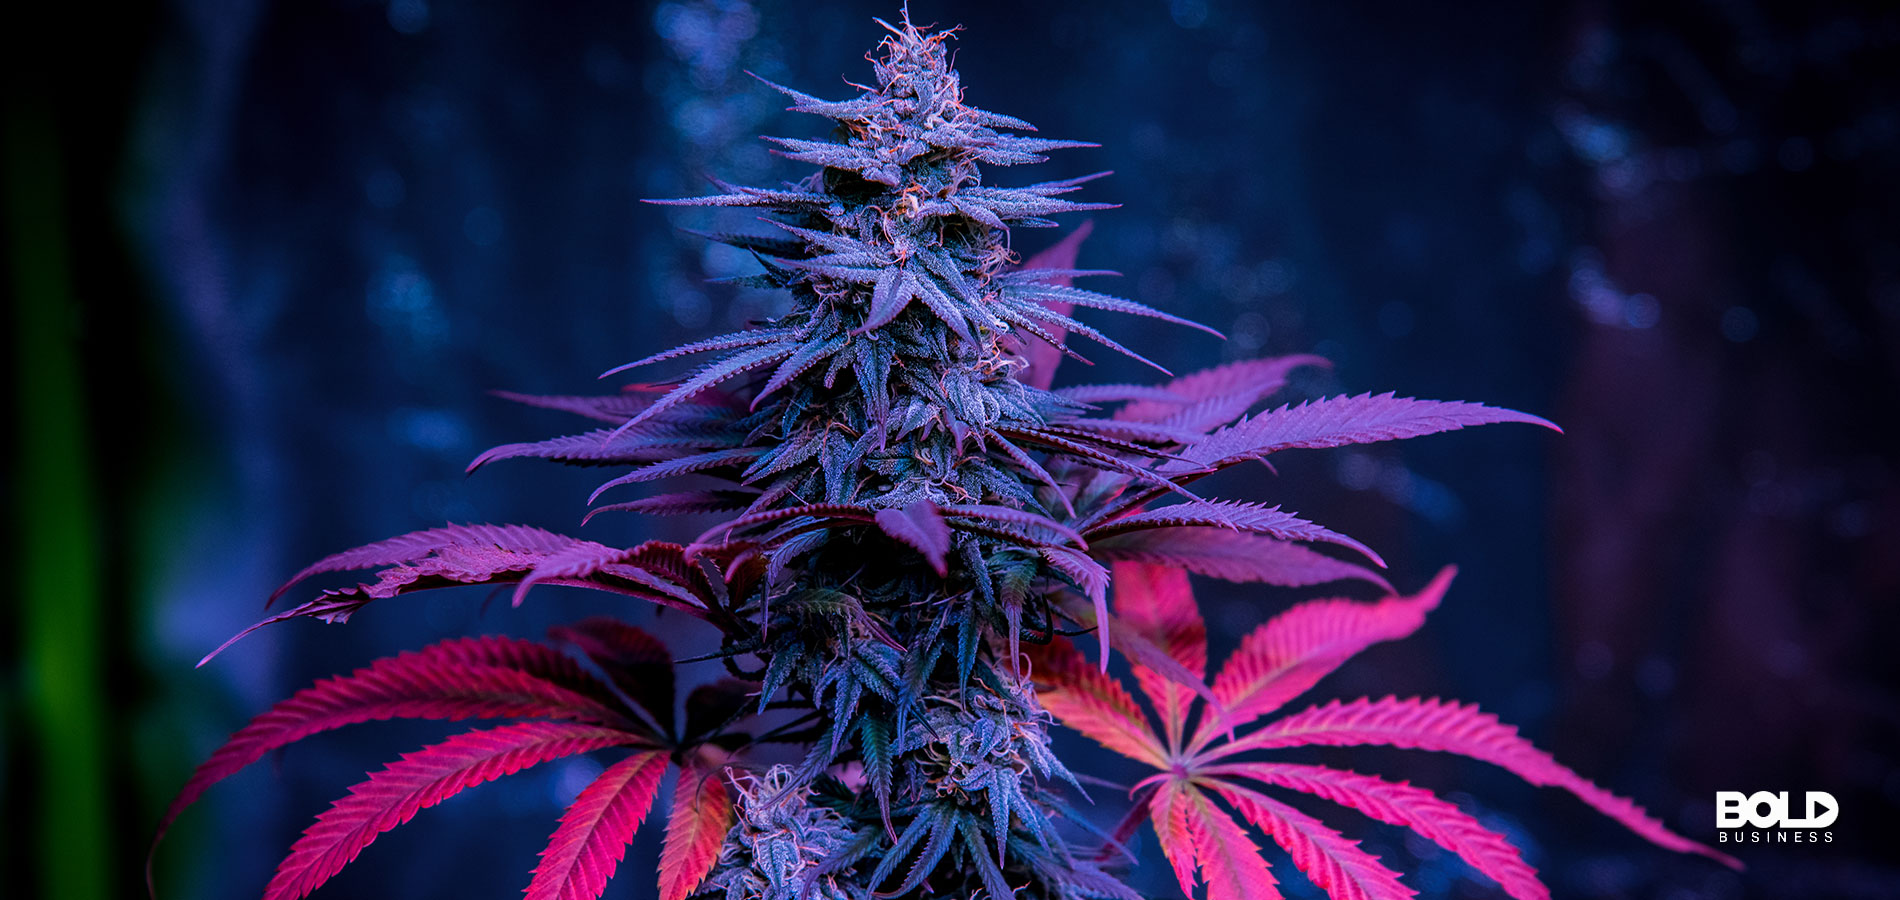 Some weird purple marijuana plant